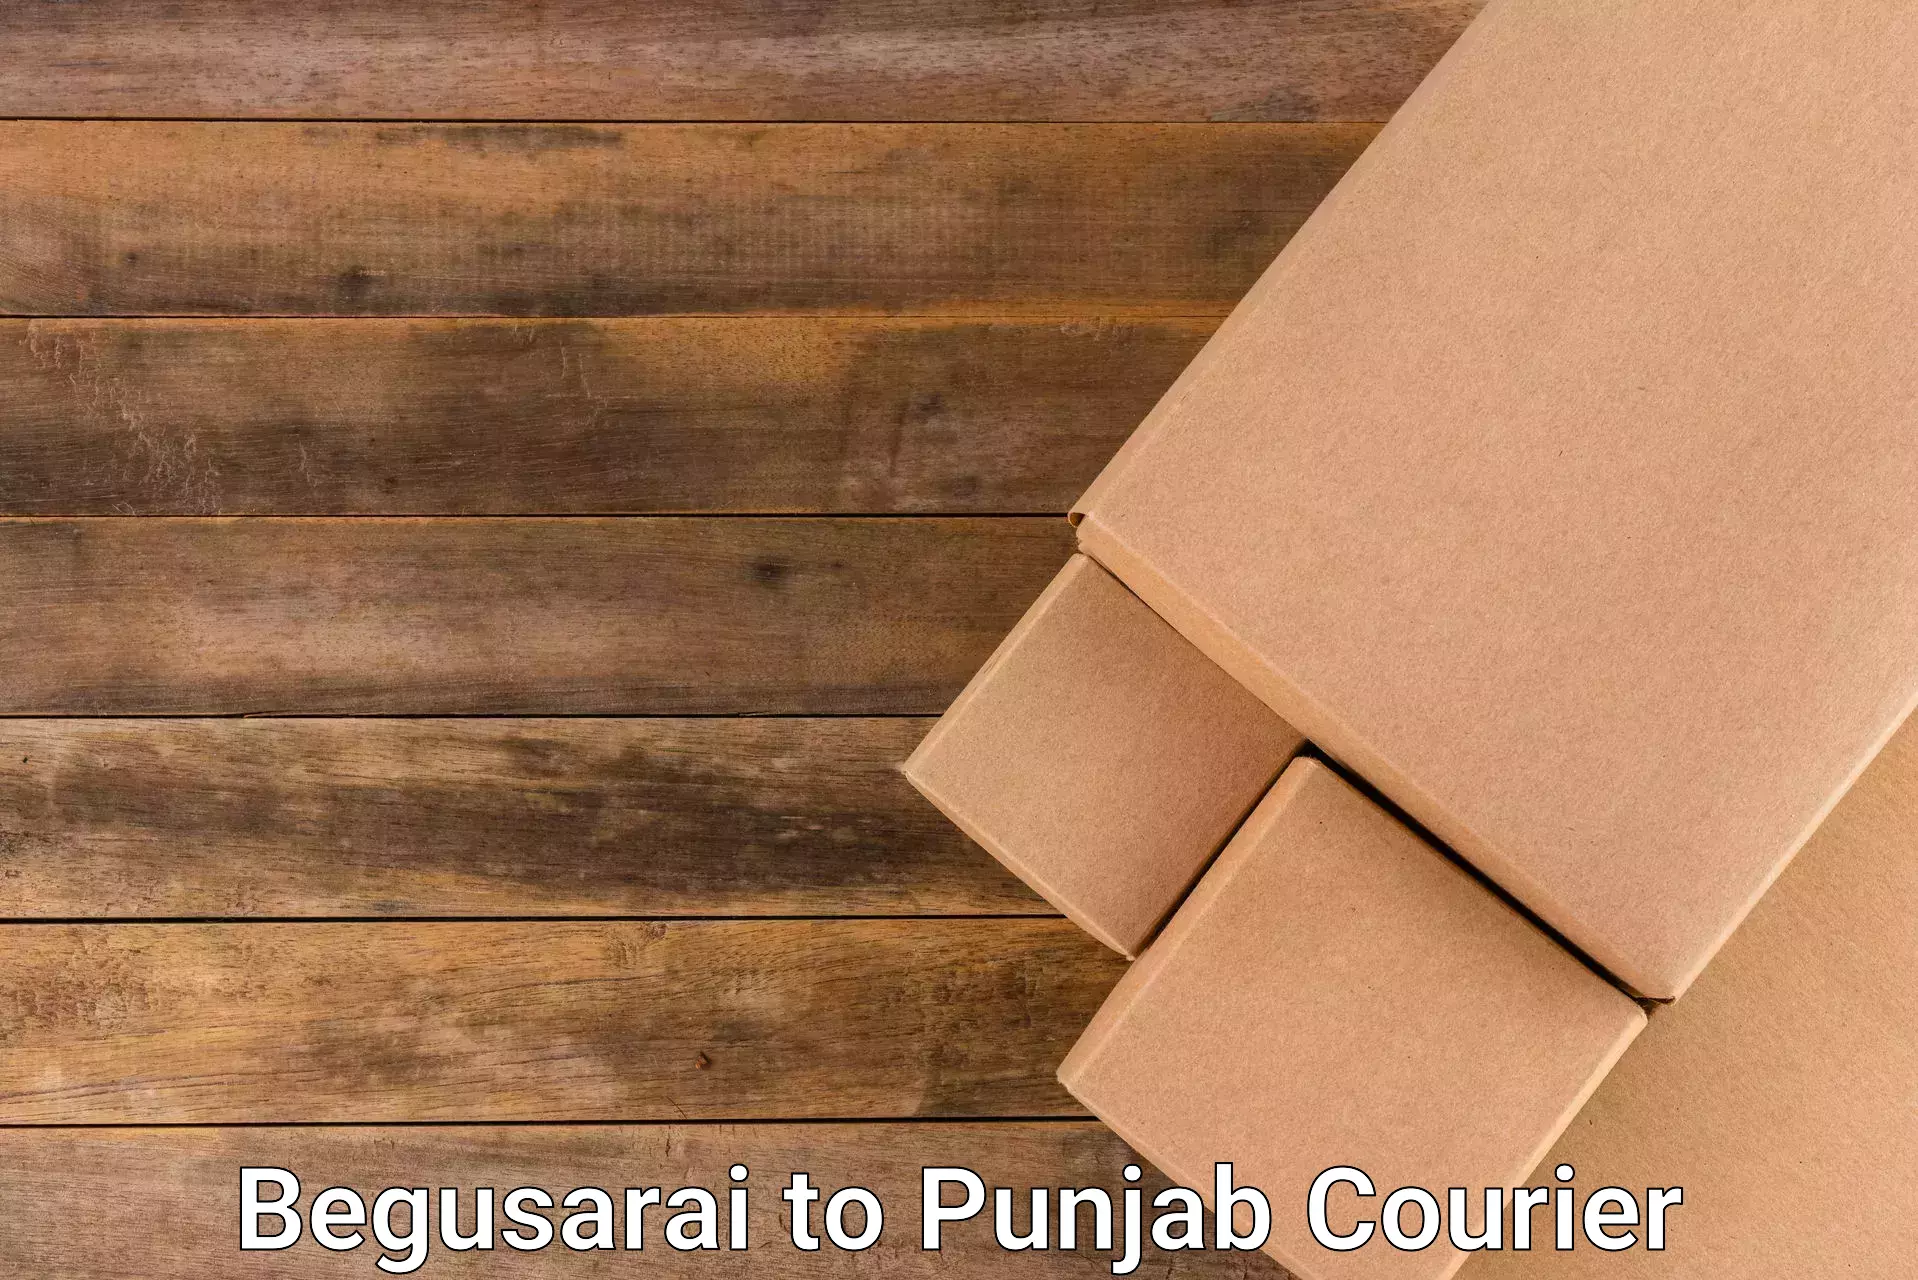 Parcel handling and care Begusarai to Punjab